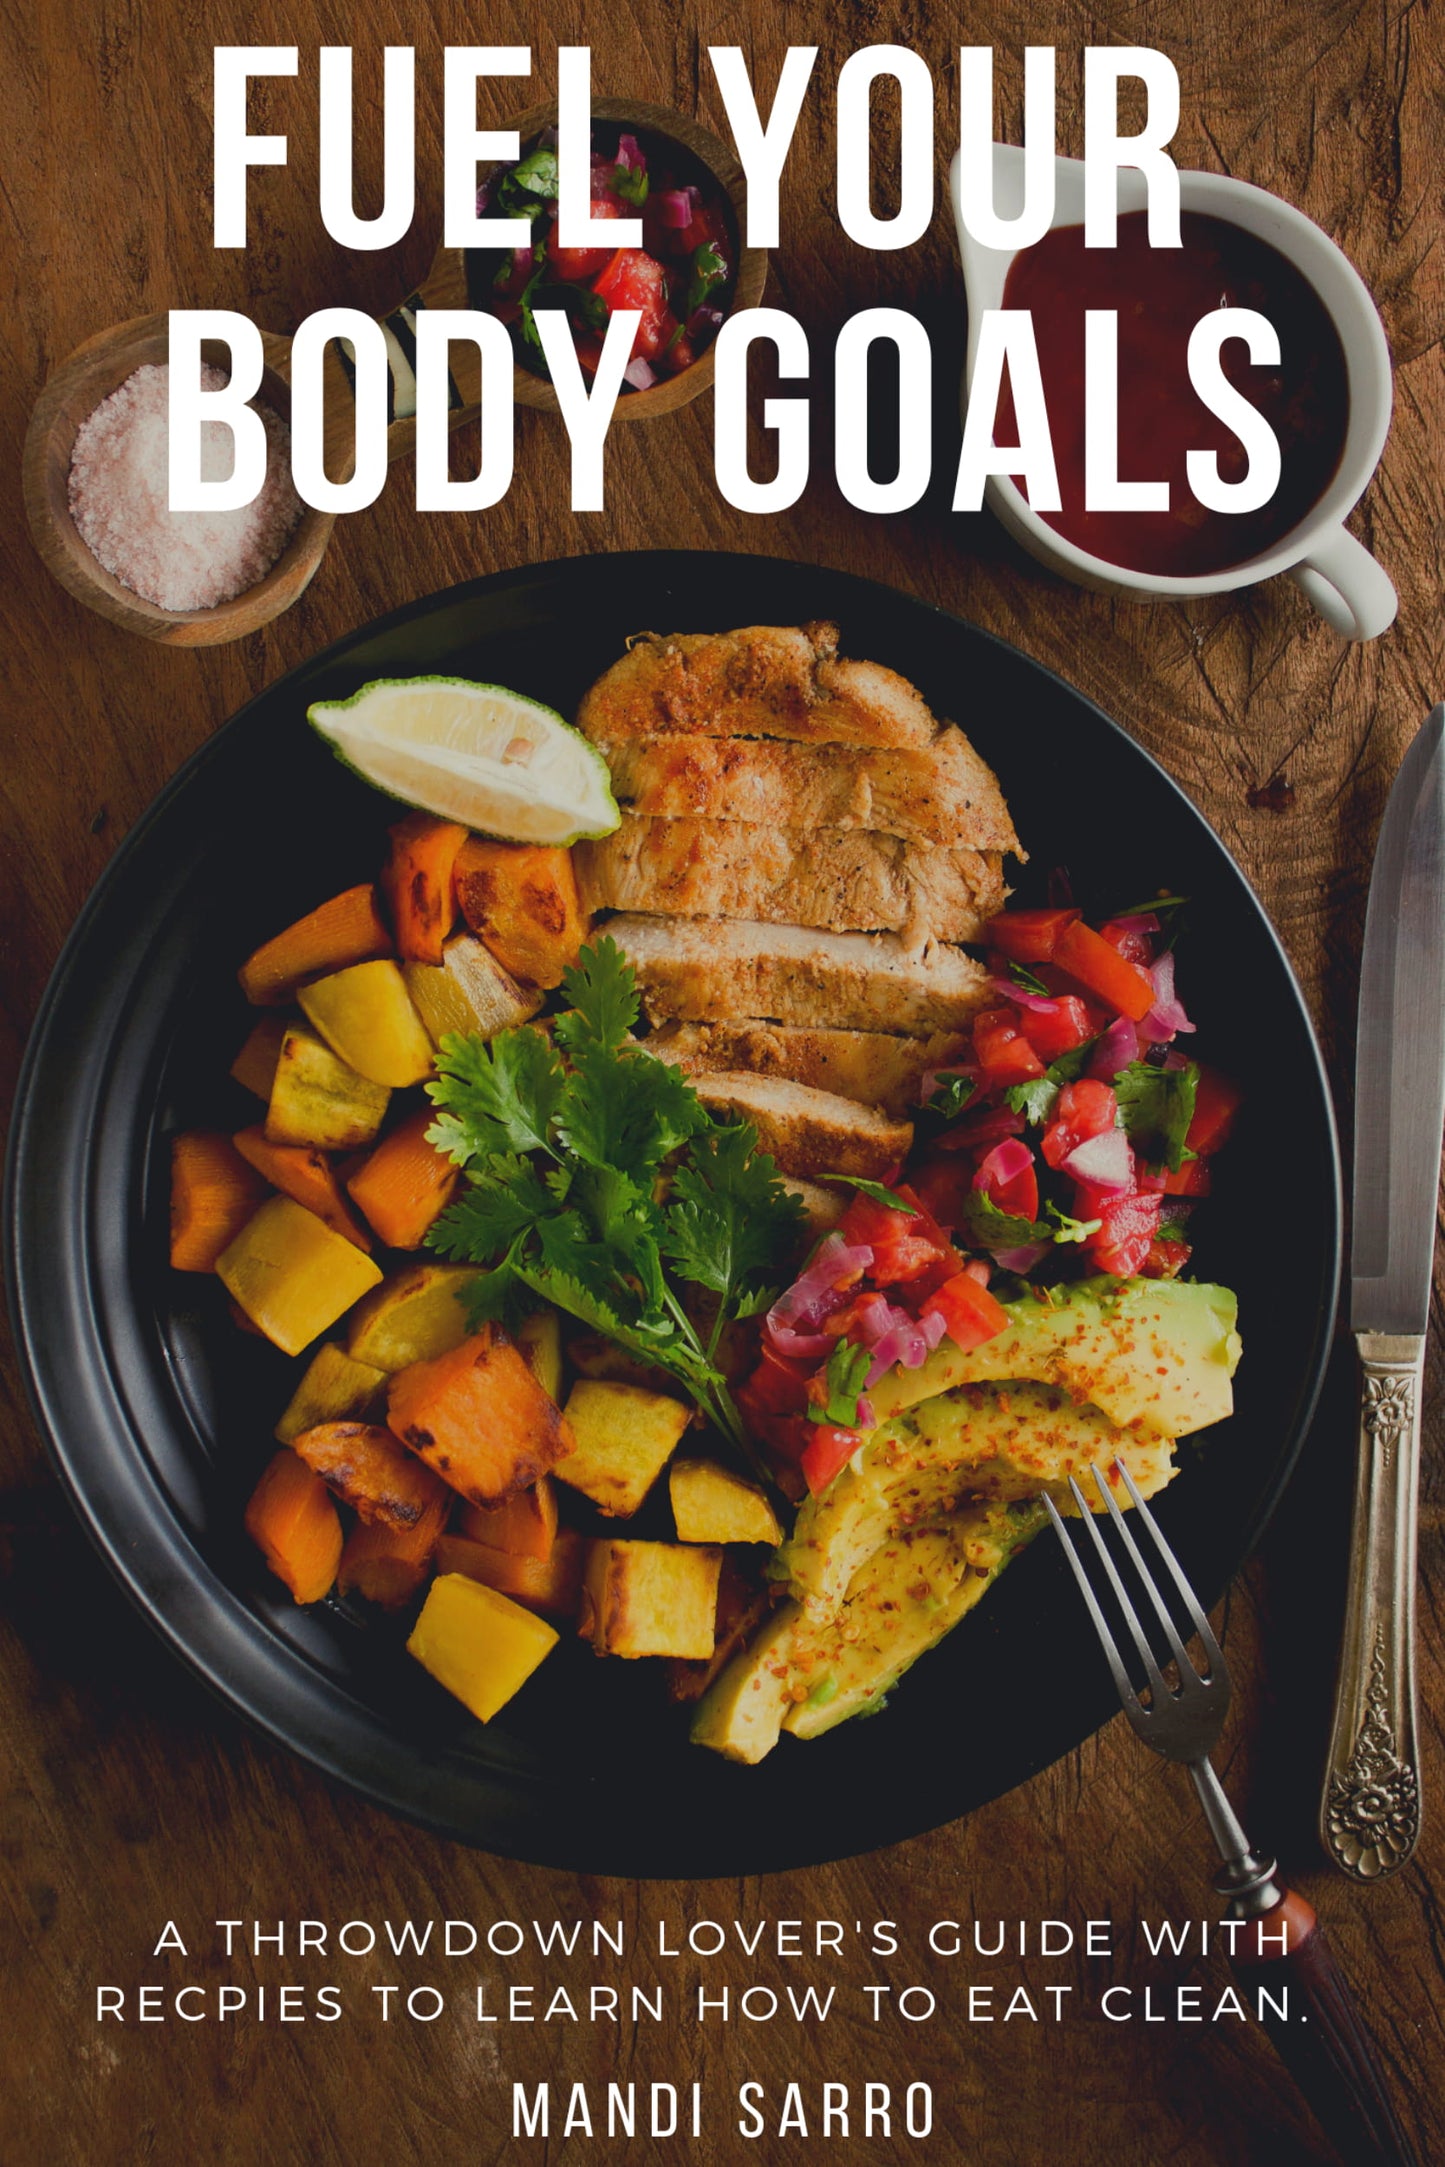 Fuel Your Body Goals by Mandi Sarro [eBook]